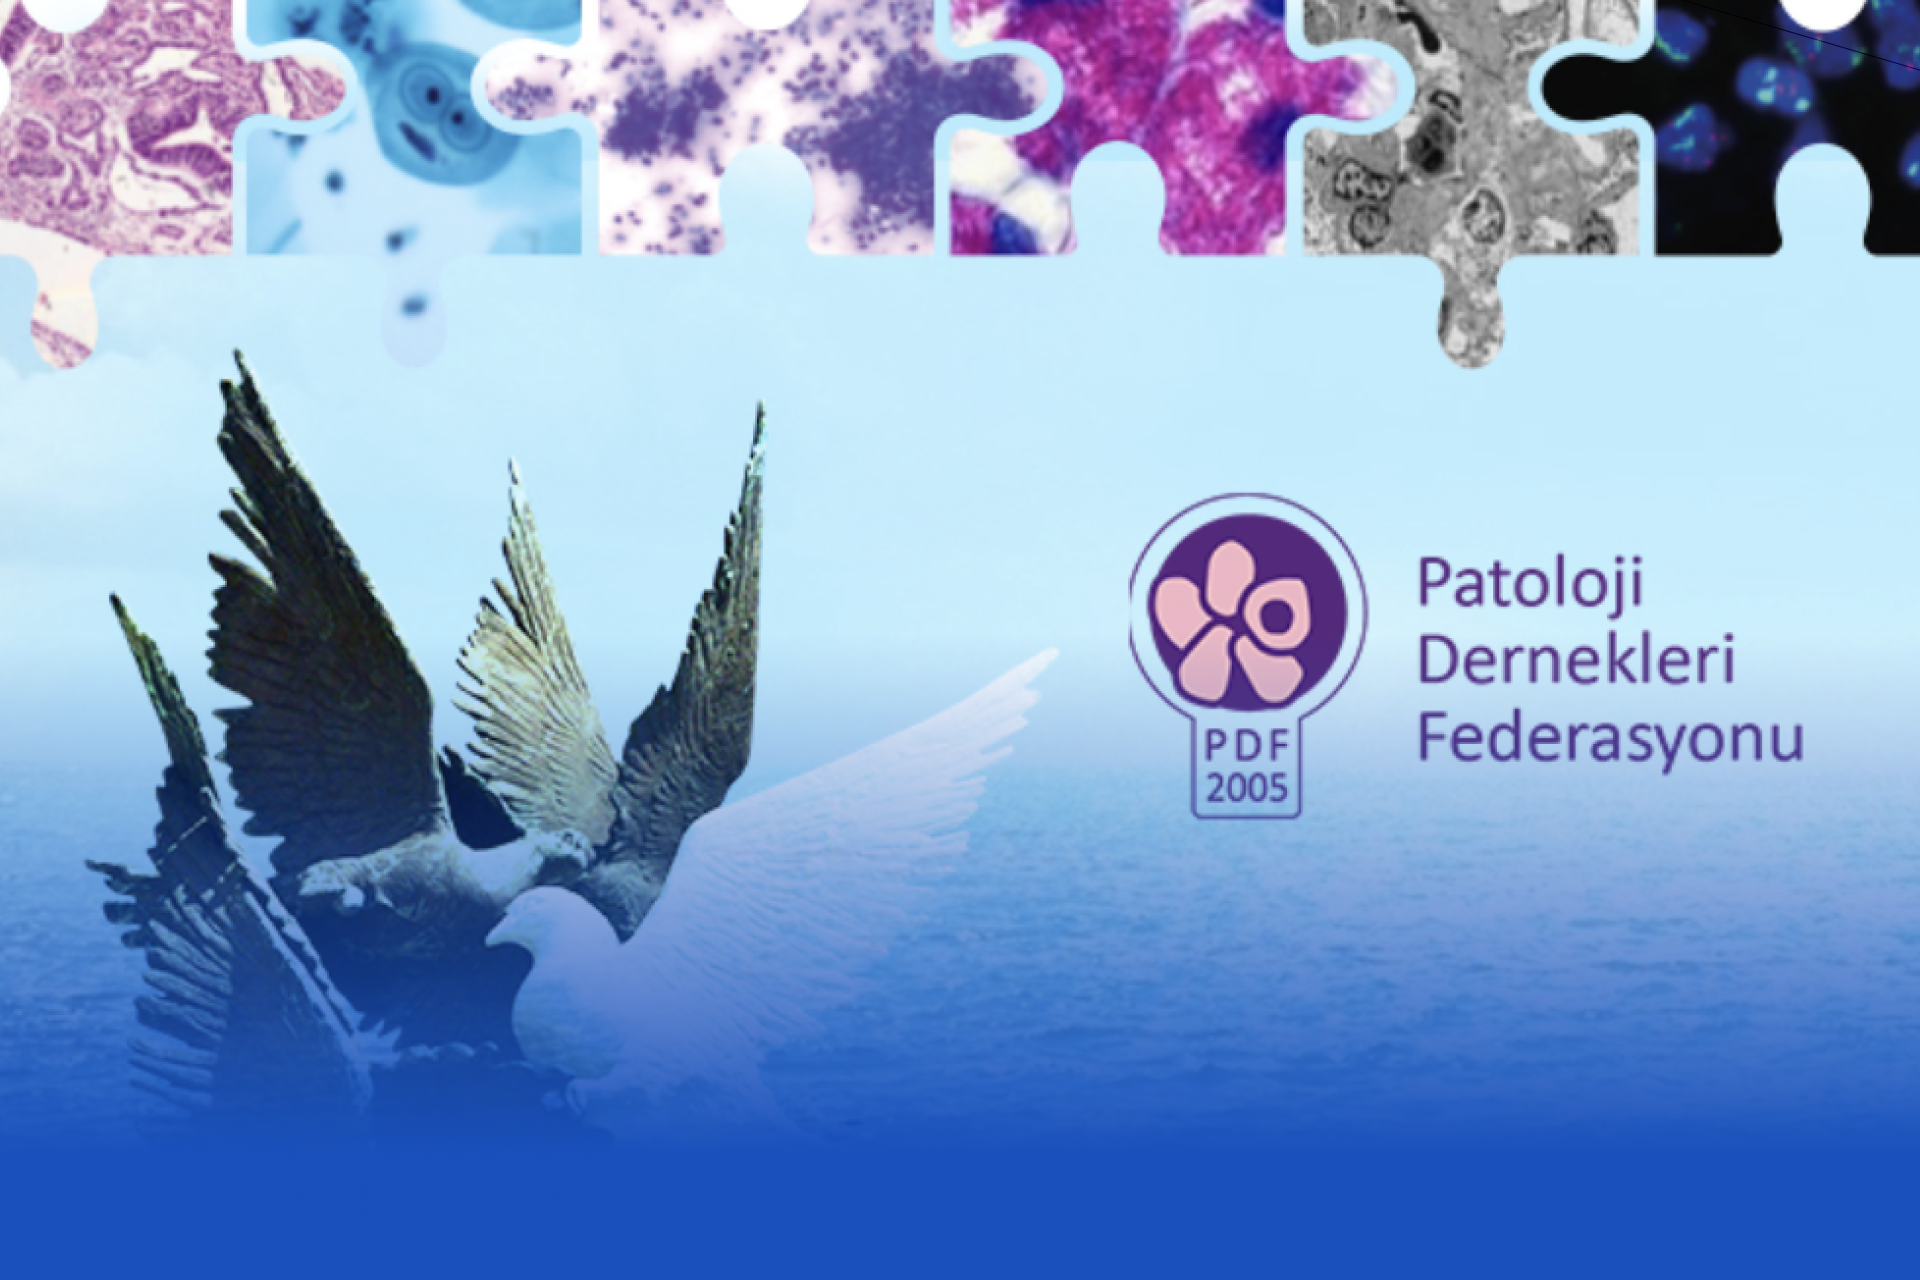 31st National Pathology Congress